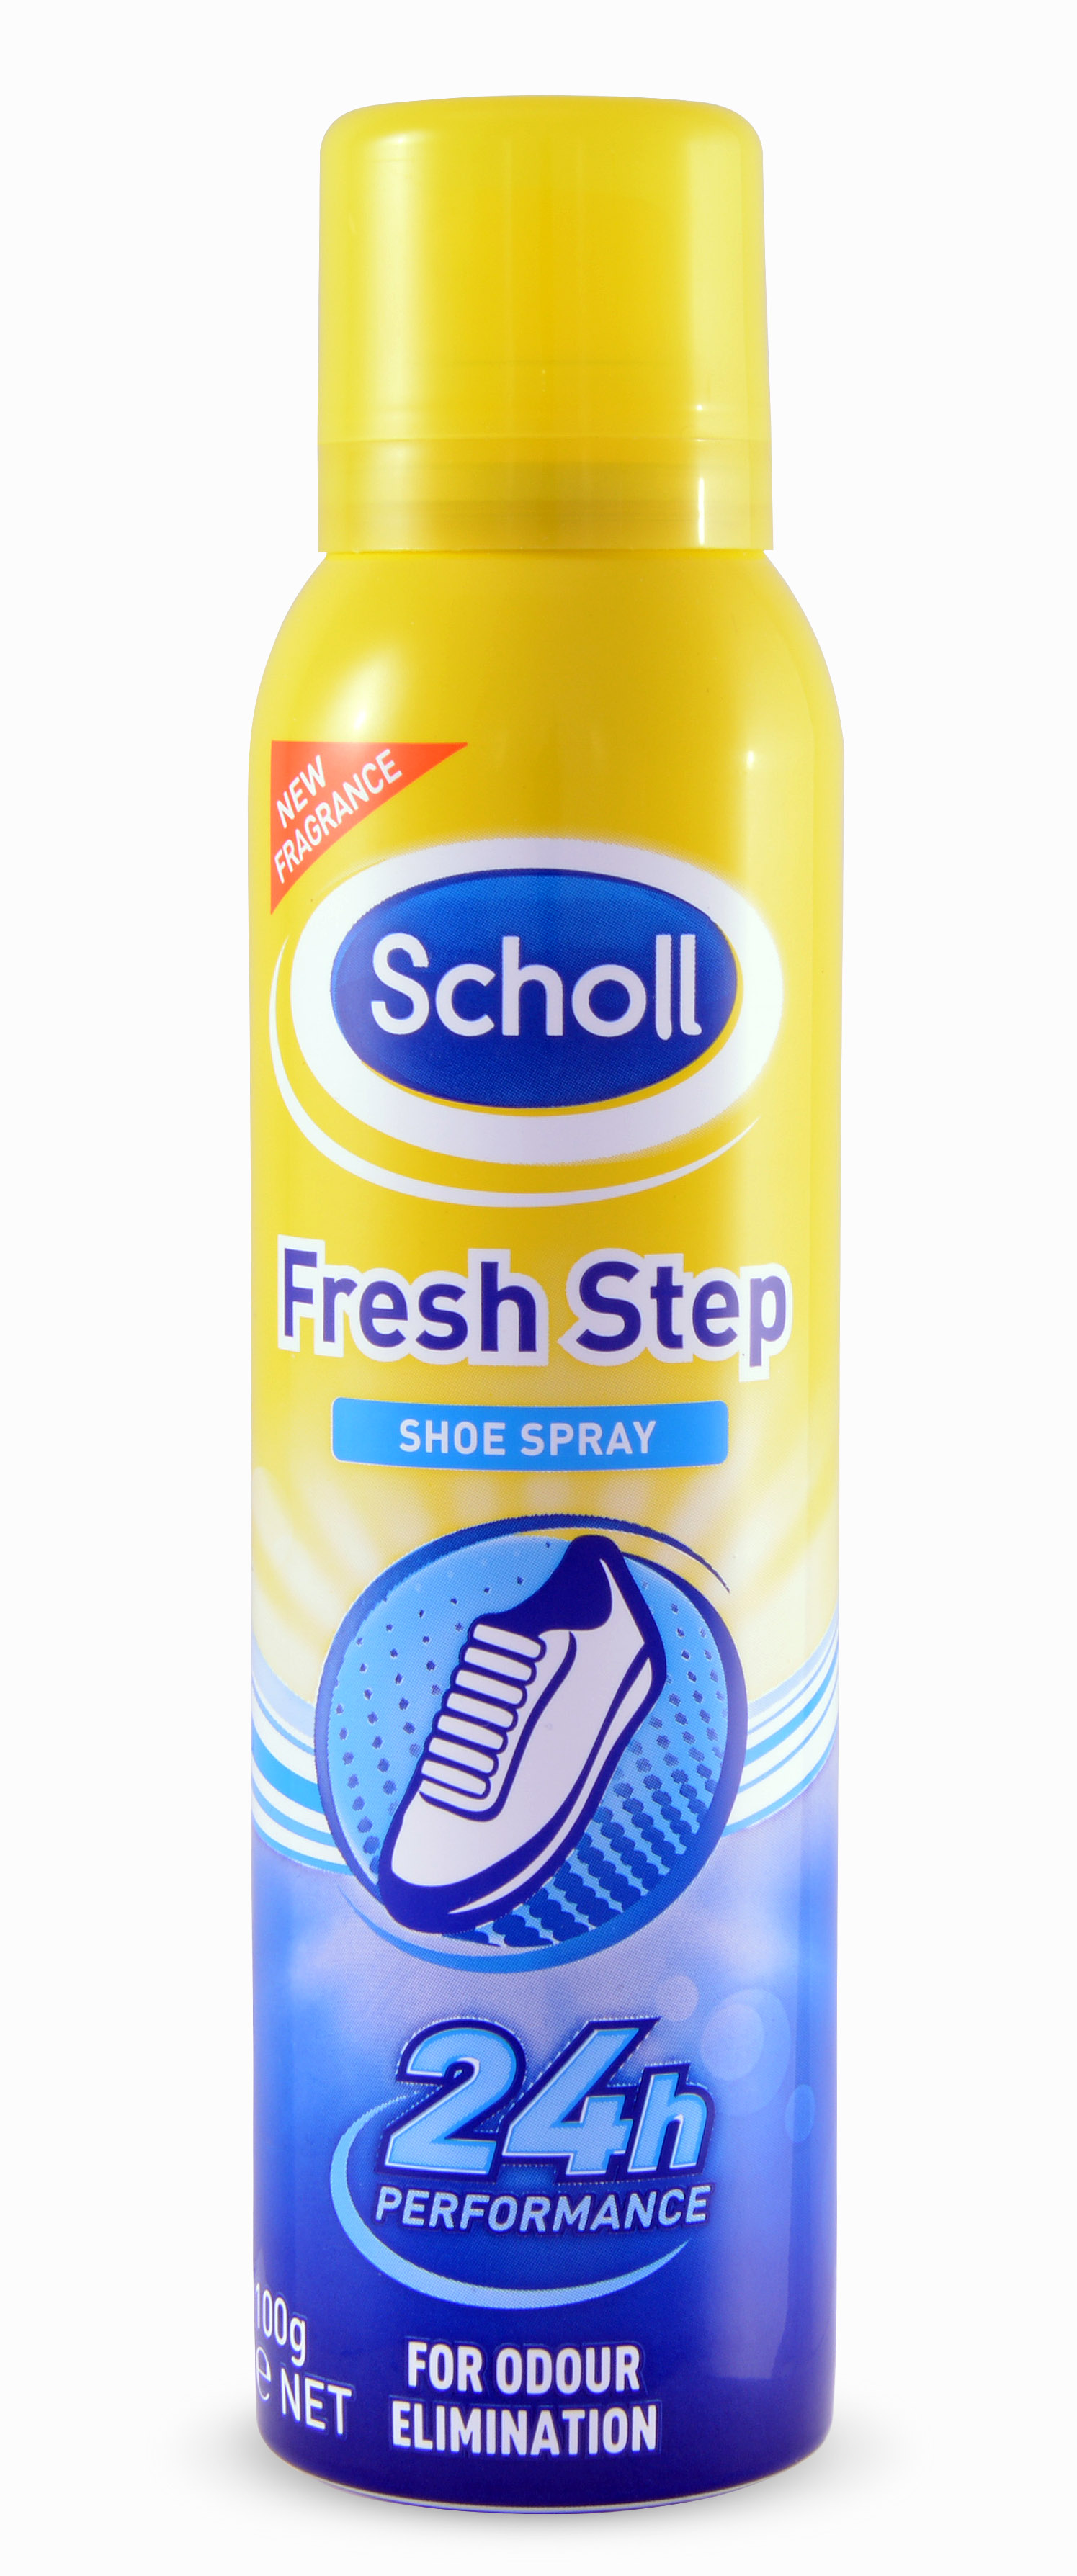 Fresh_Step_ShoeSpray_Scholl.jpg